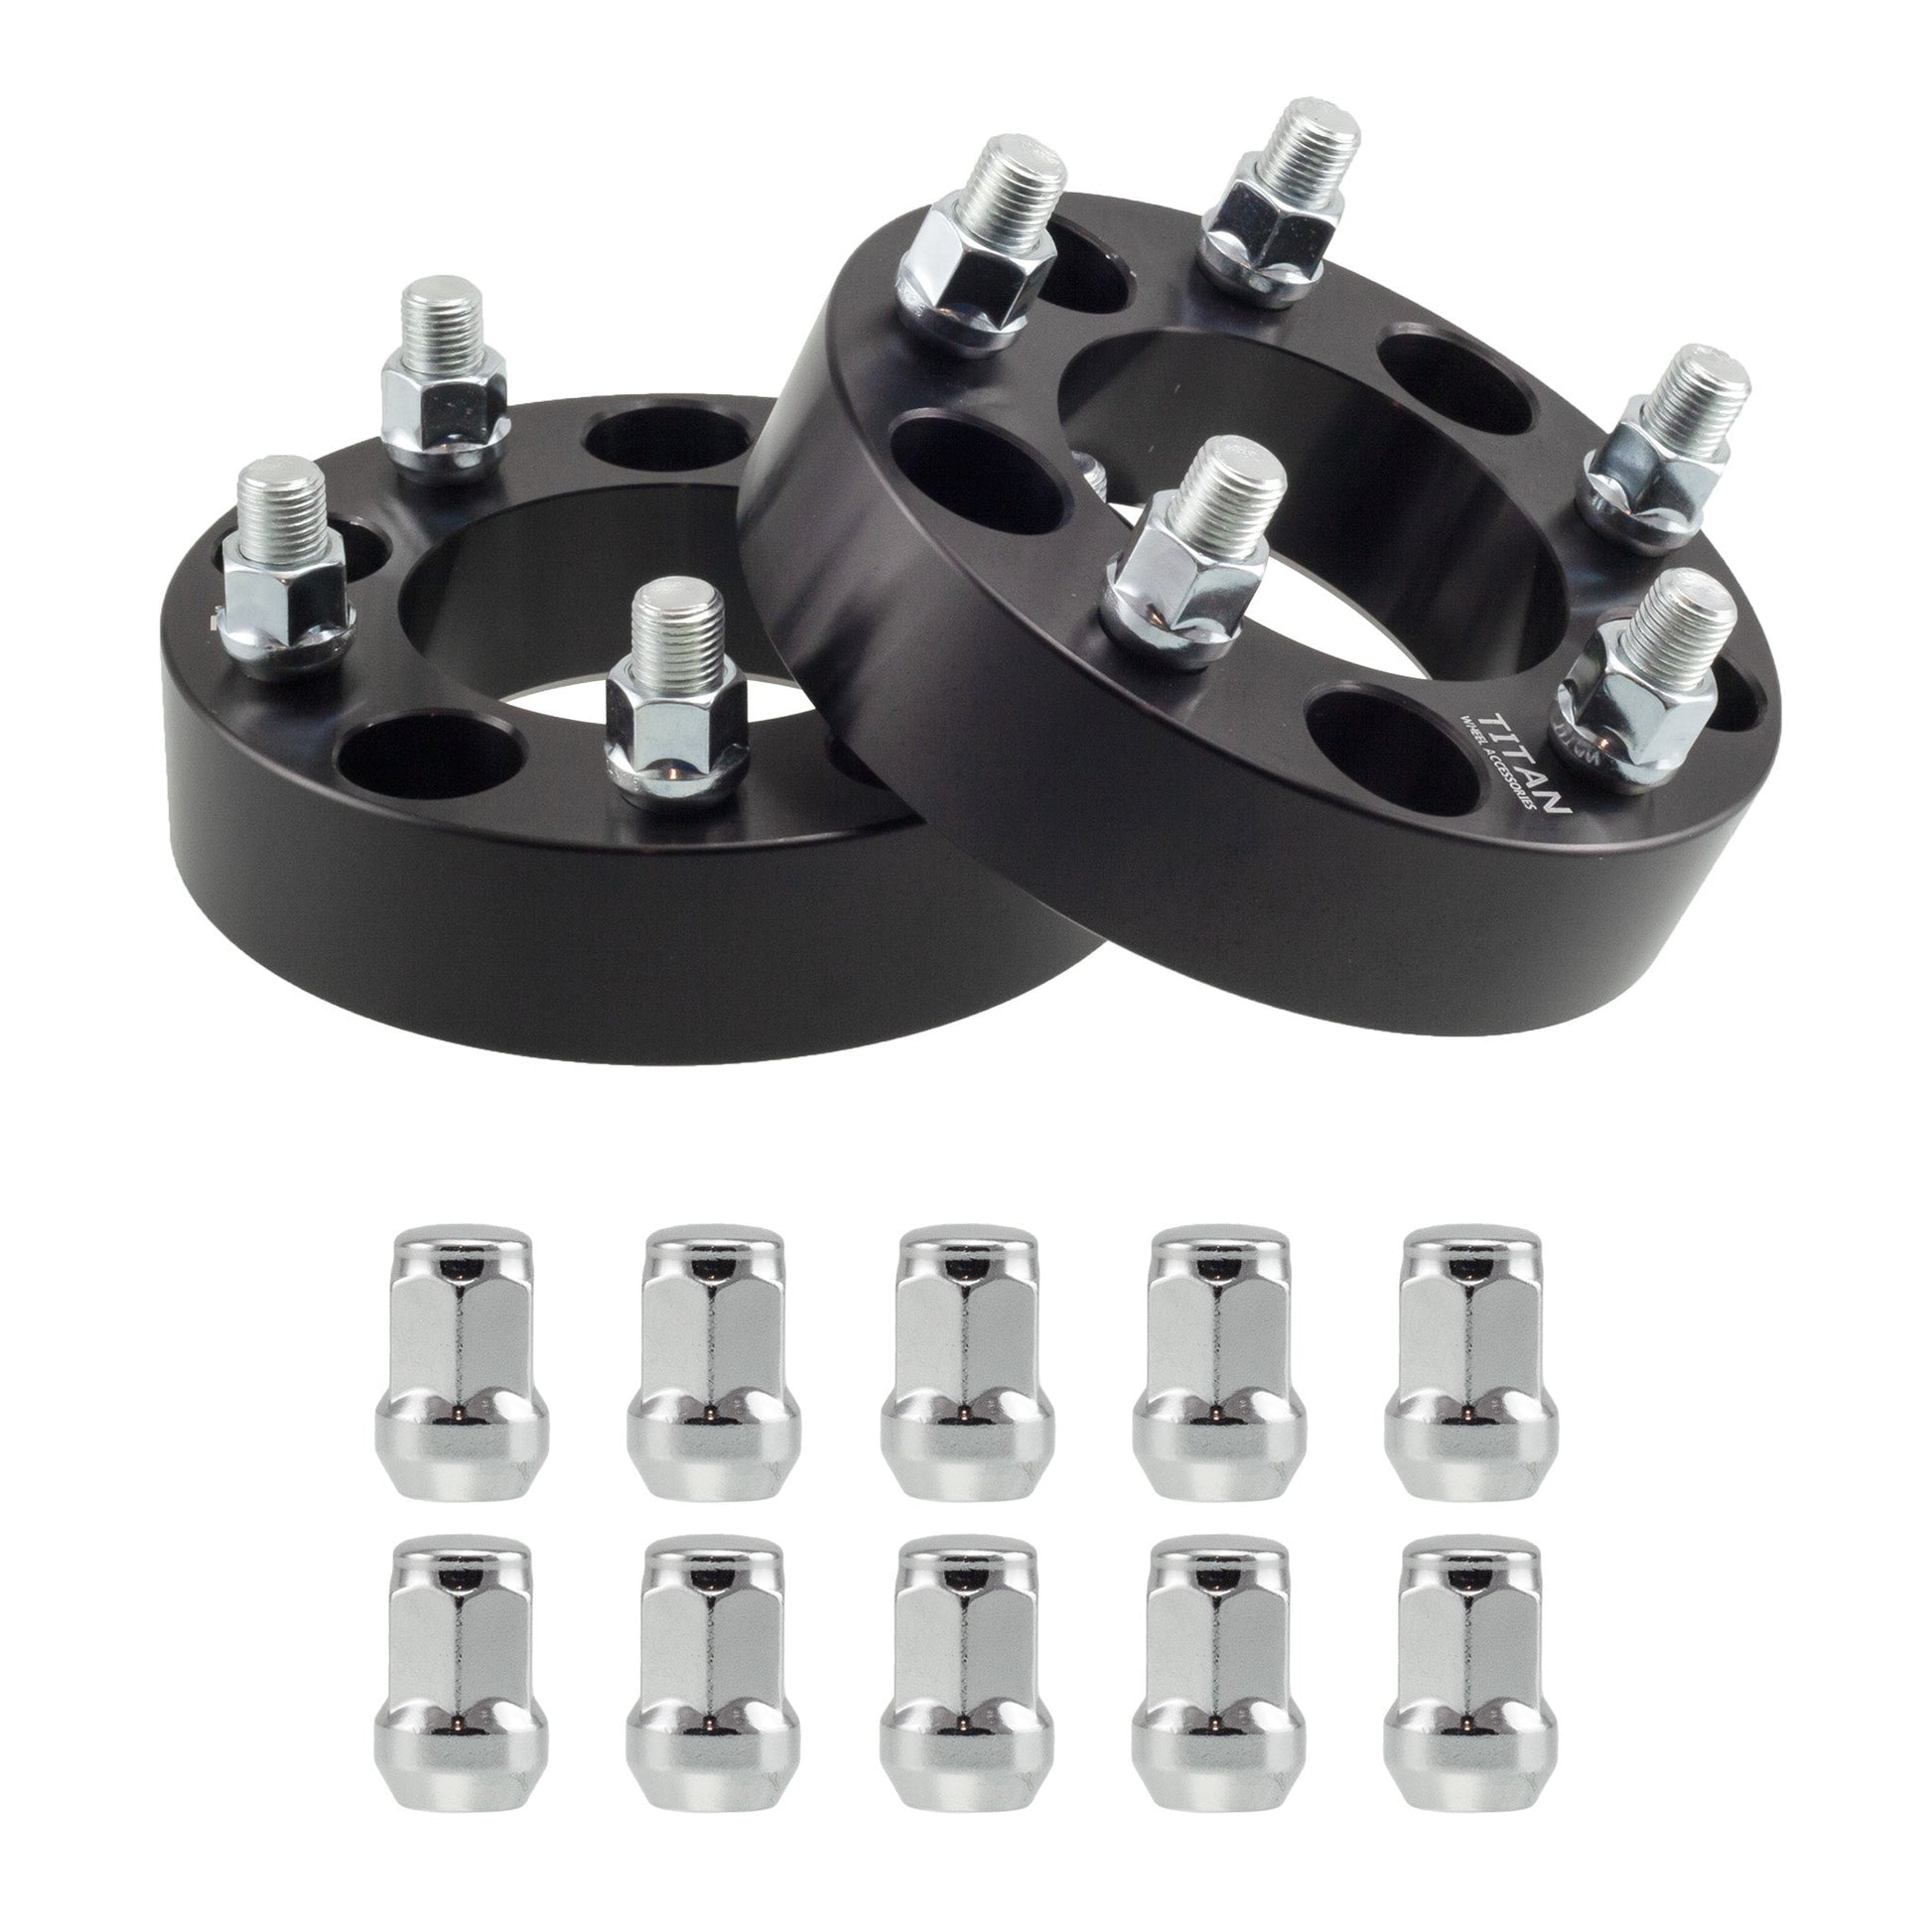 2" (50mm) Titan Wheel Spacers for Chevy Camaro | 5x4.75 (5x120) | 66.9 Hubcentric |14x1.5 Studs | Titan Wheel Accessories